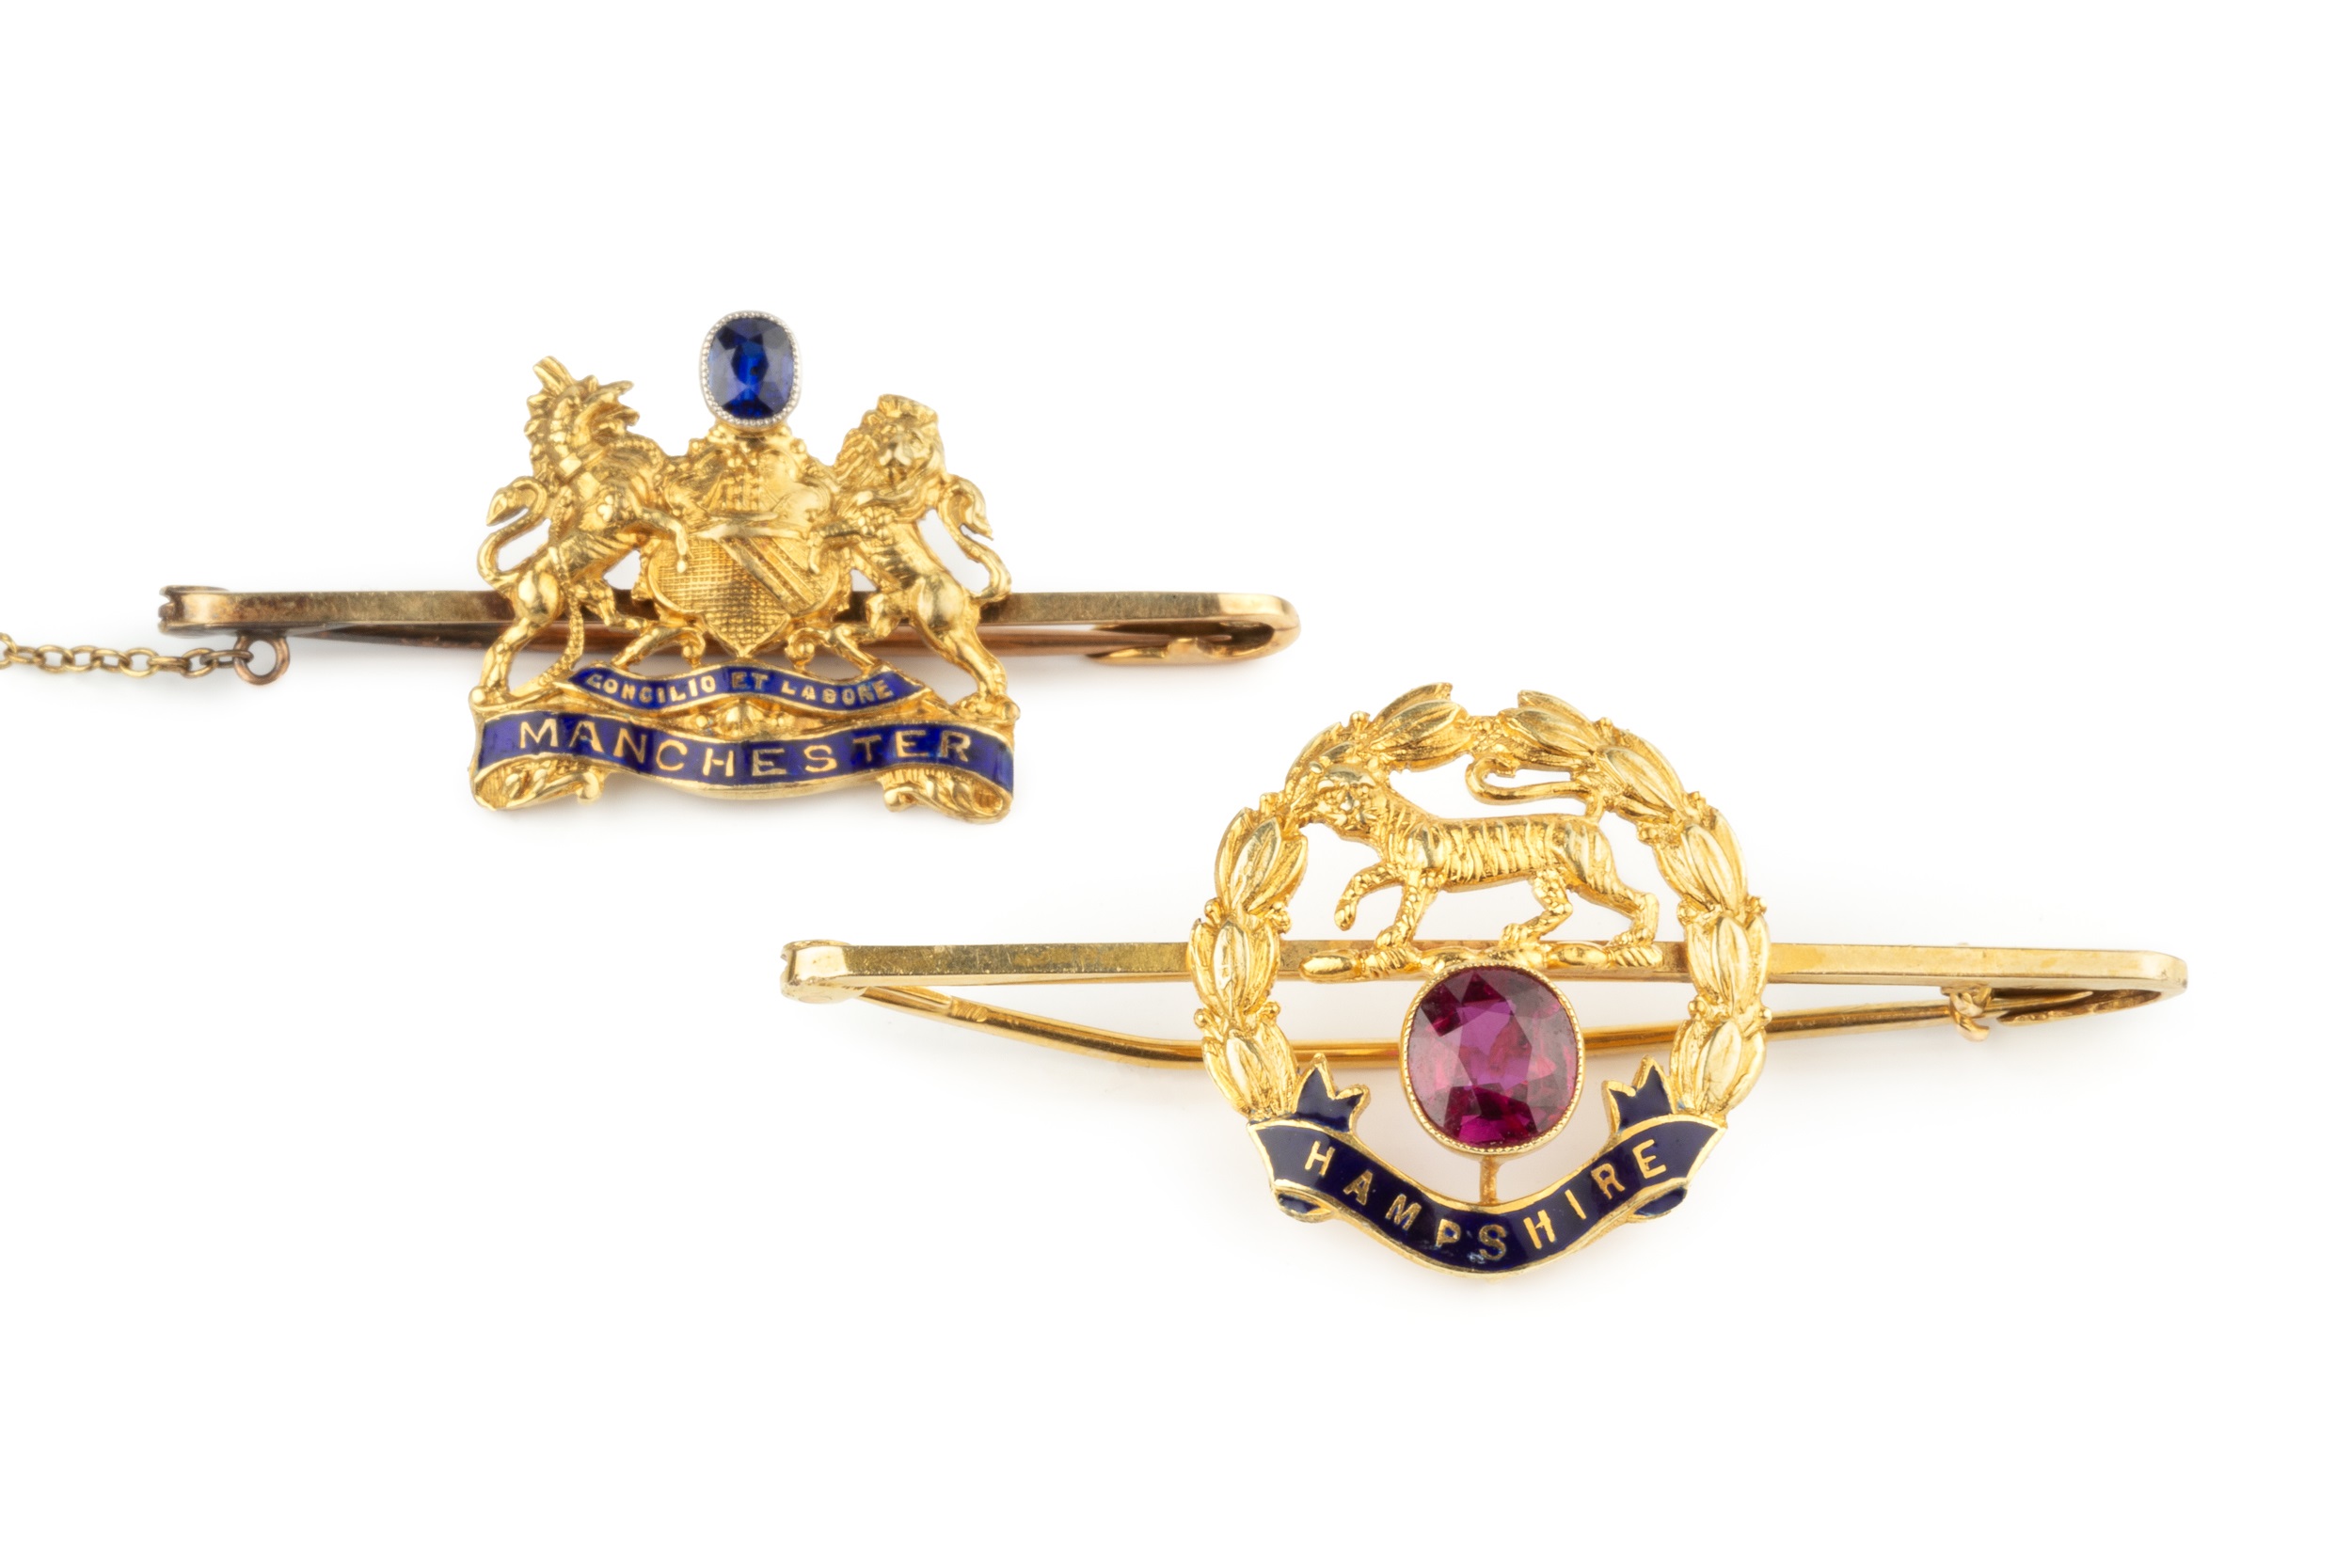 A 15ct gold, enamel and gem set regimental brooch, for the Hampshire regiment, of wreath design with